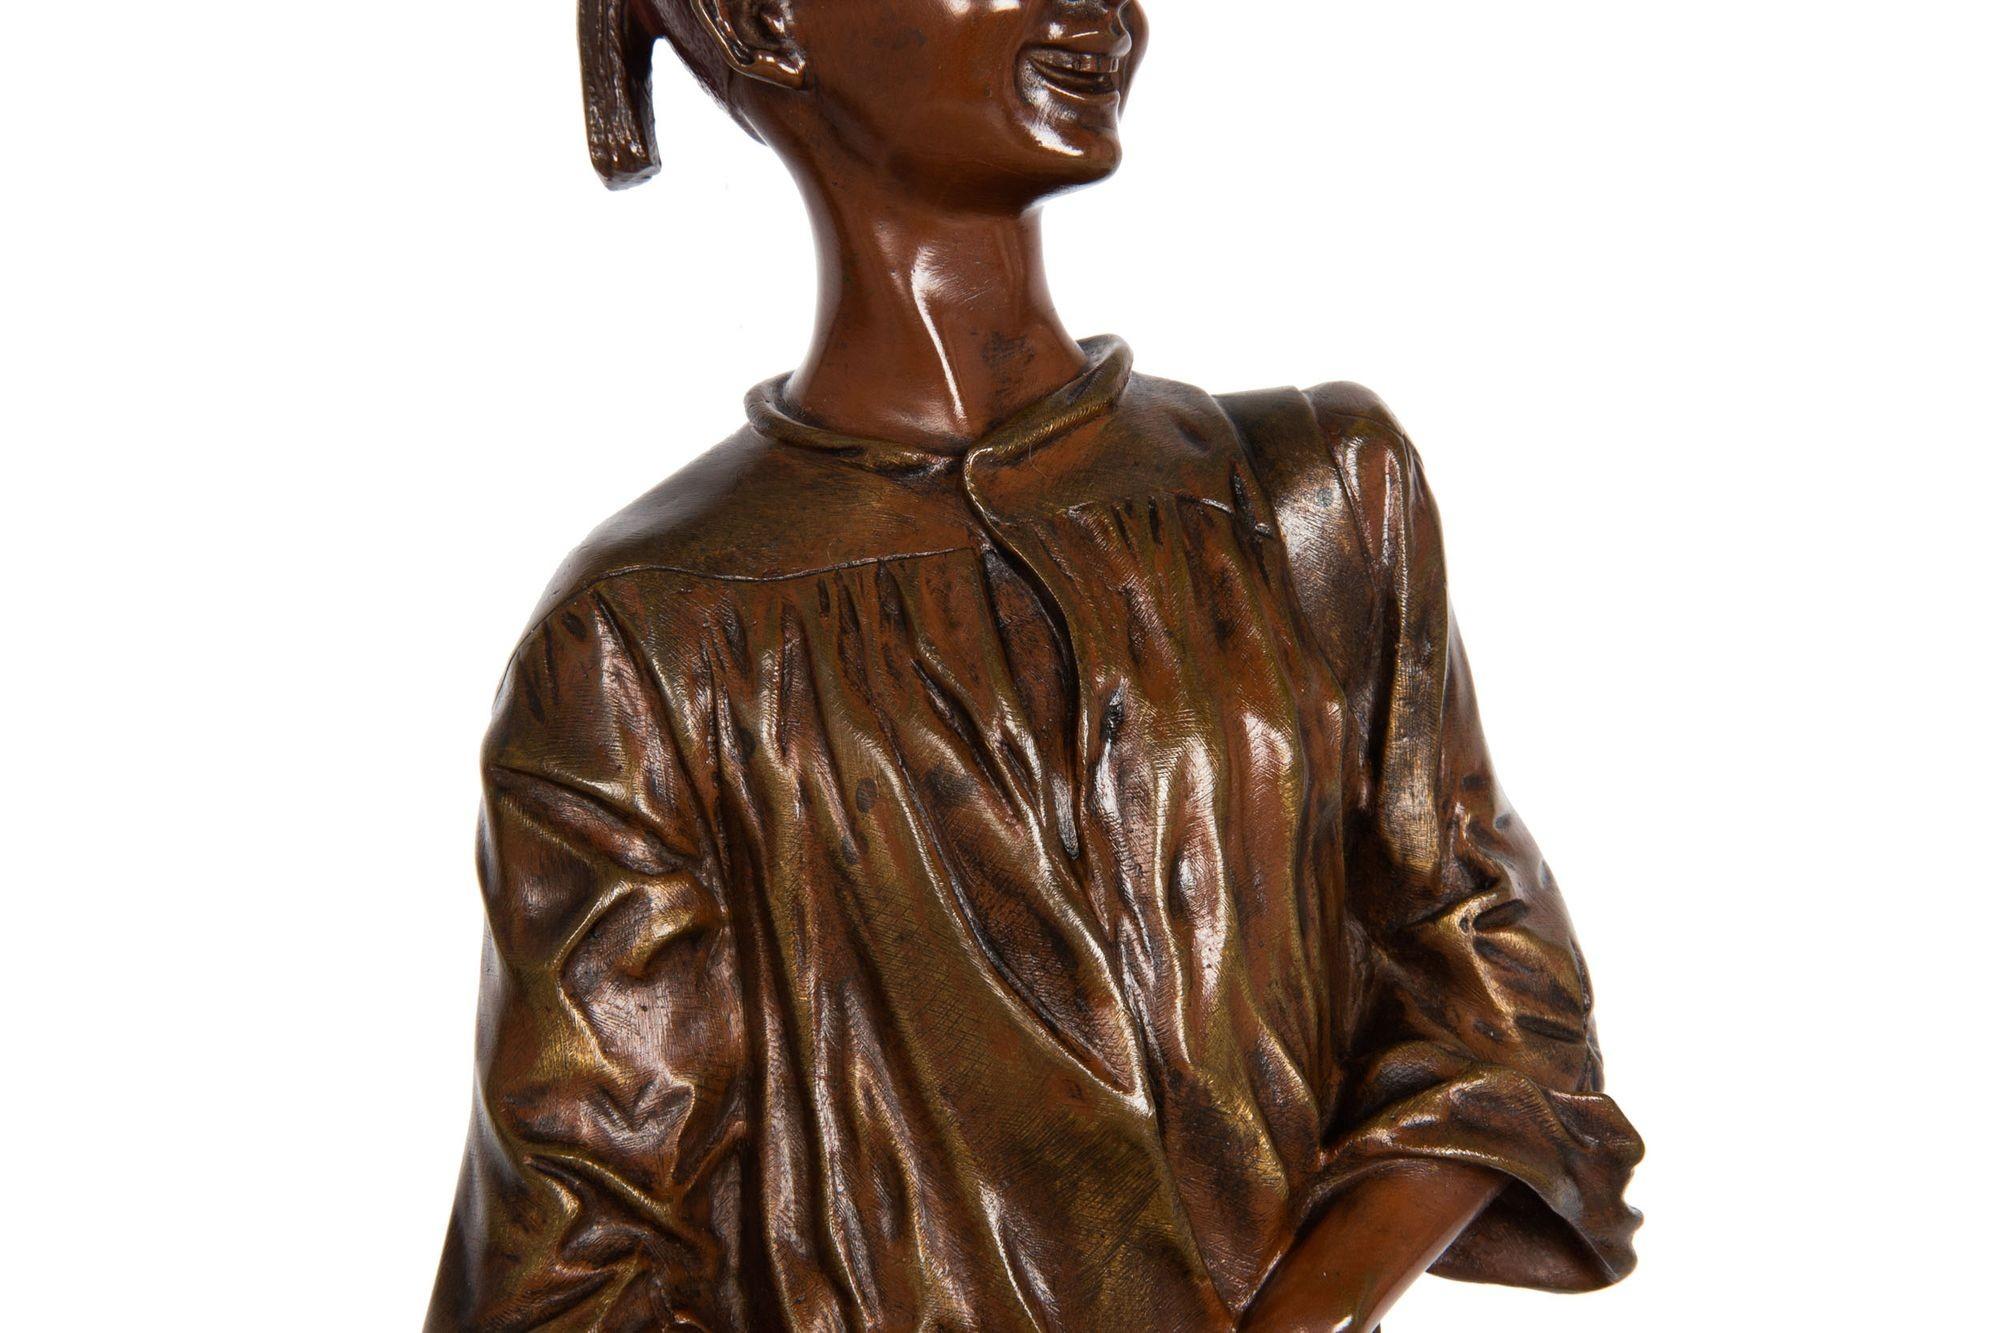 French Orientalist Antique Bronze Sculpture by Edouard Drouot of Shoeshine Boy For Sale 2